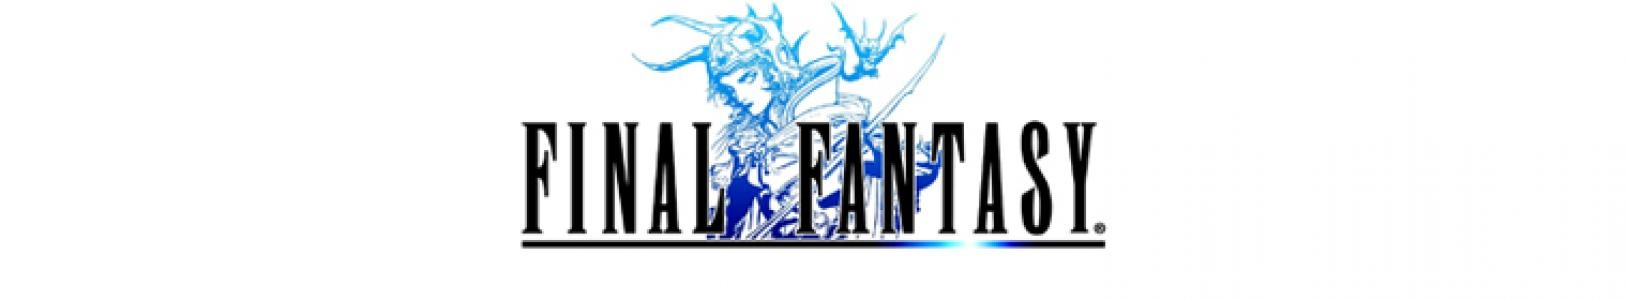 Final Fantasy banner